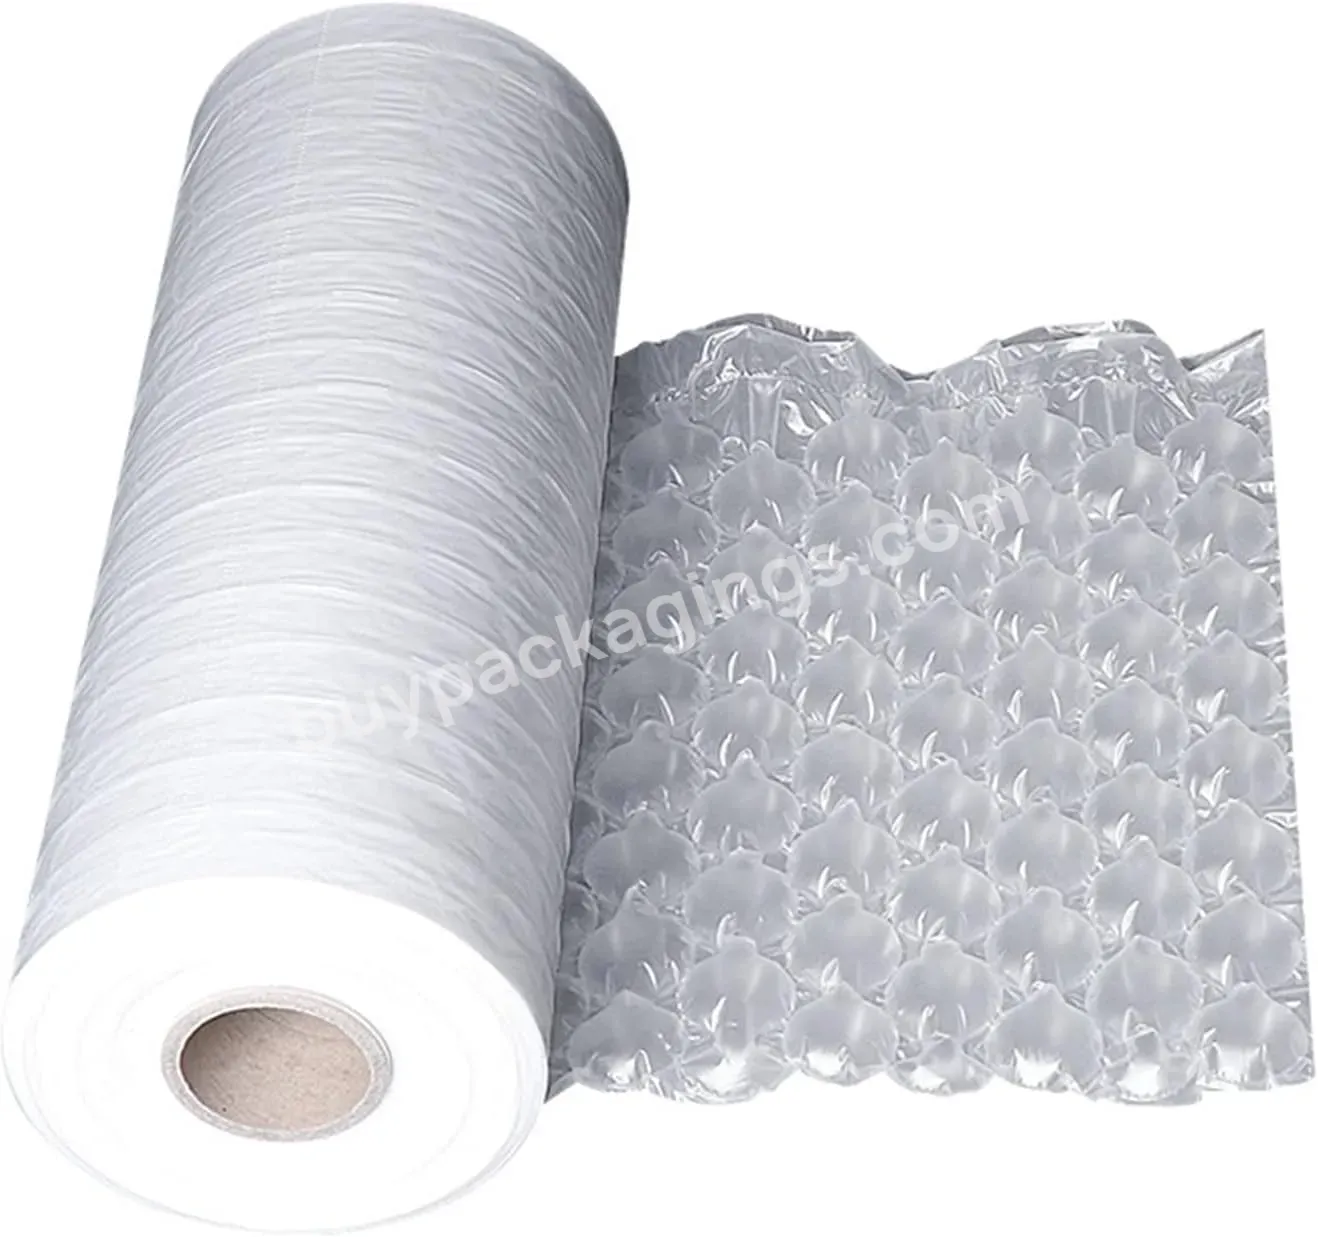 Wholesale 40*50 Cm Transparent Air Bubble File Strong Pe Wrap Roll Film Air Cushion Packaging Materials 300 M - Buy Bubble Wrap,Bubble Wrap Film Roll,Inflatable Air Bubble Wrap.